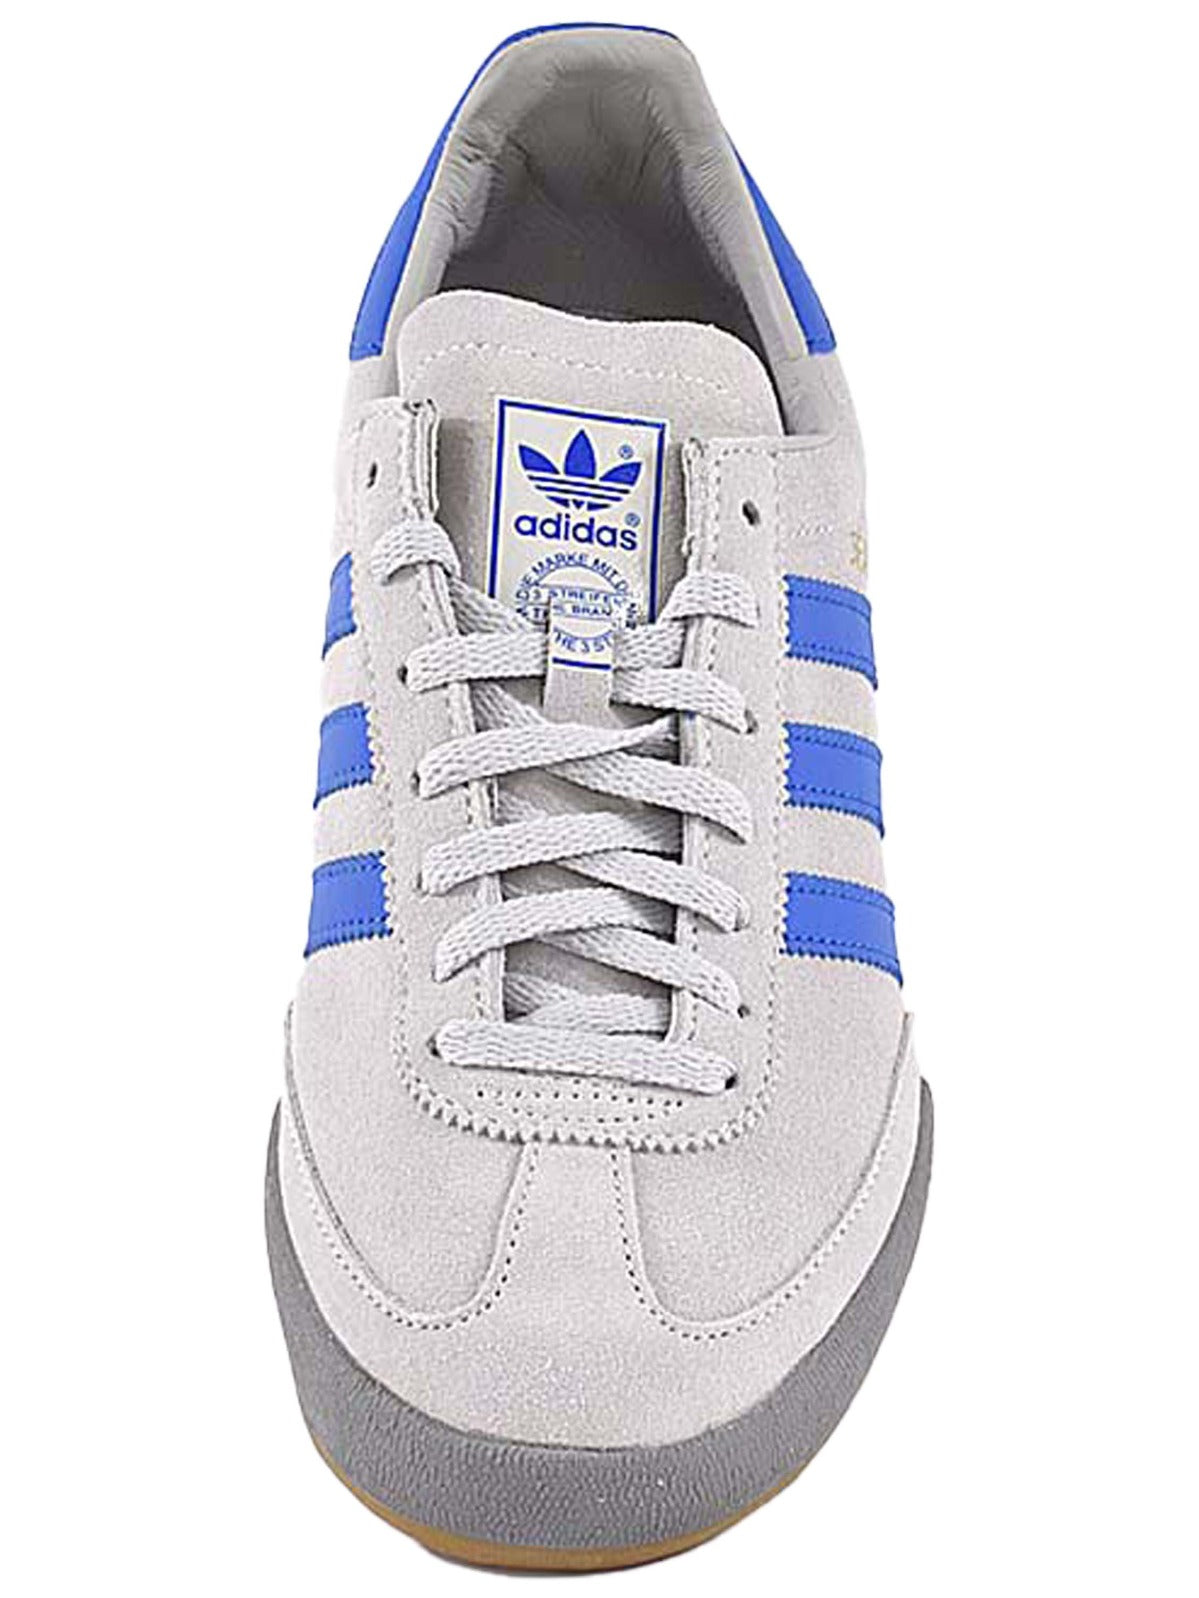 Adidas Originals Jeans Trainers Chalk White/Burg - 80s Casual Classics